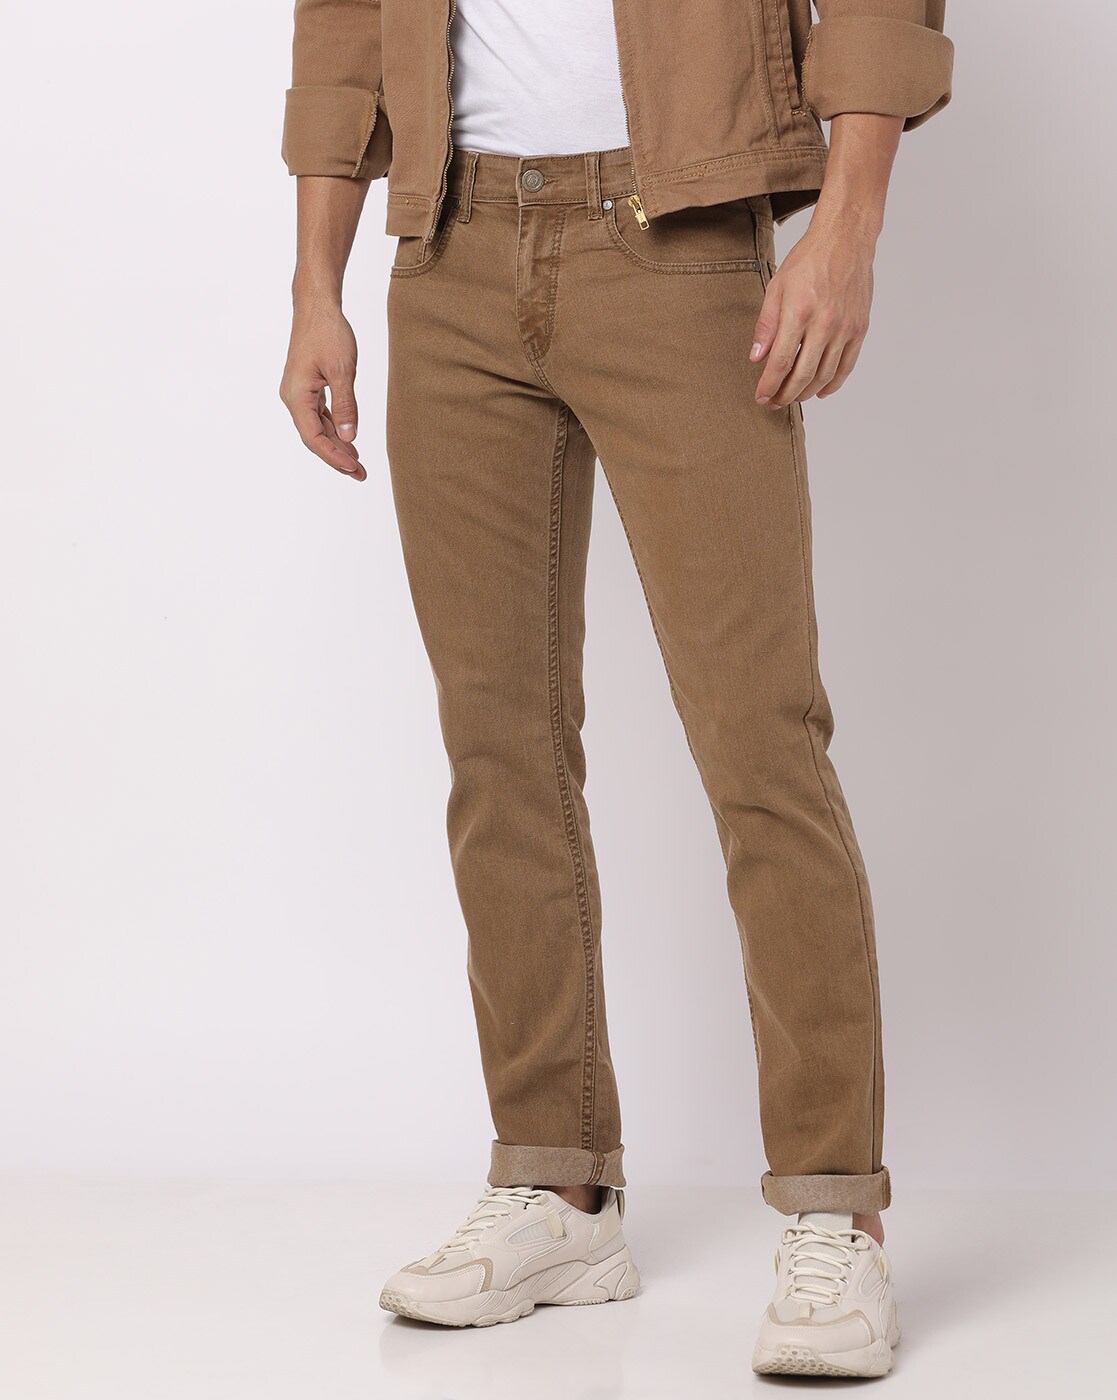 Buy Brown Jeans for Men by DJ & C Ajio.com